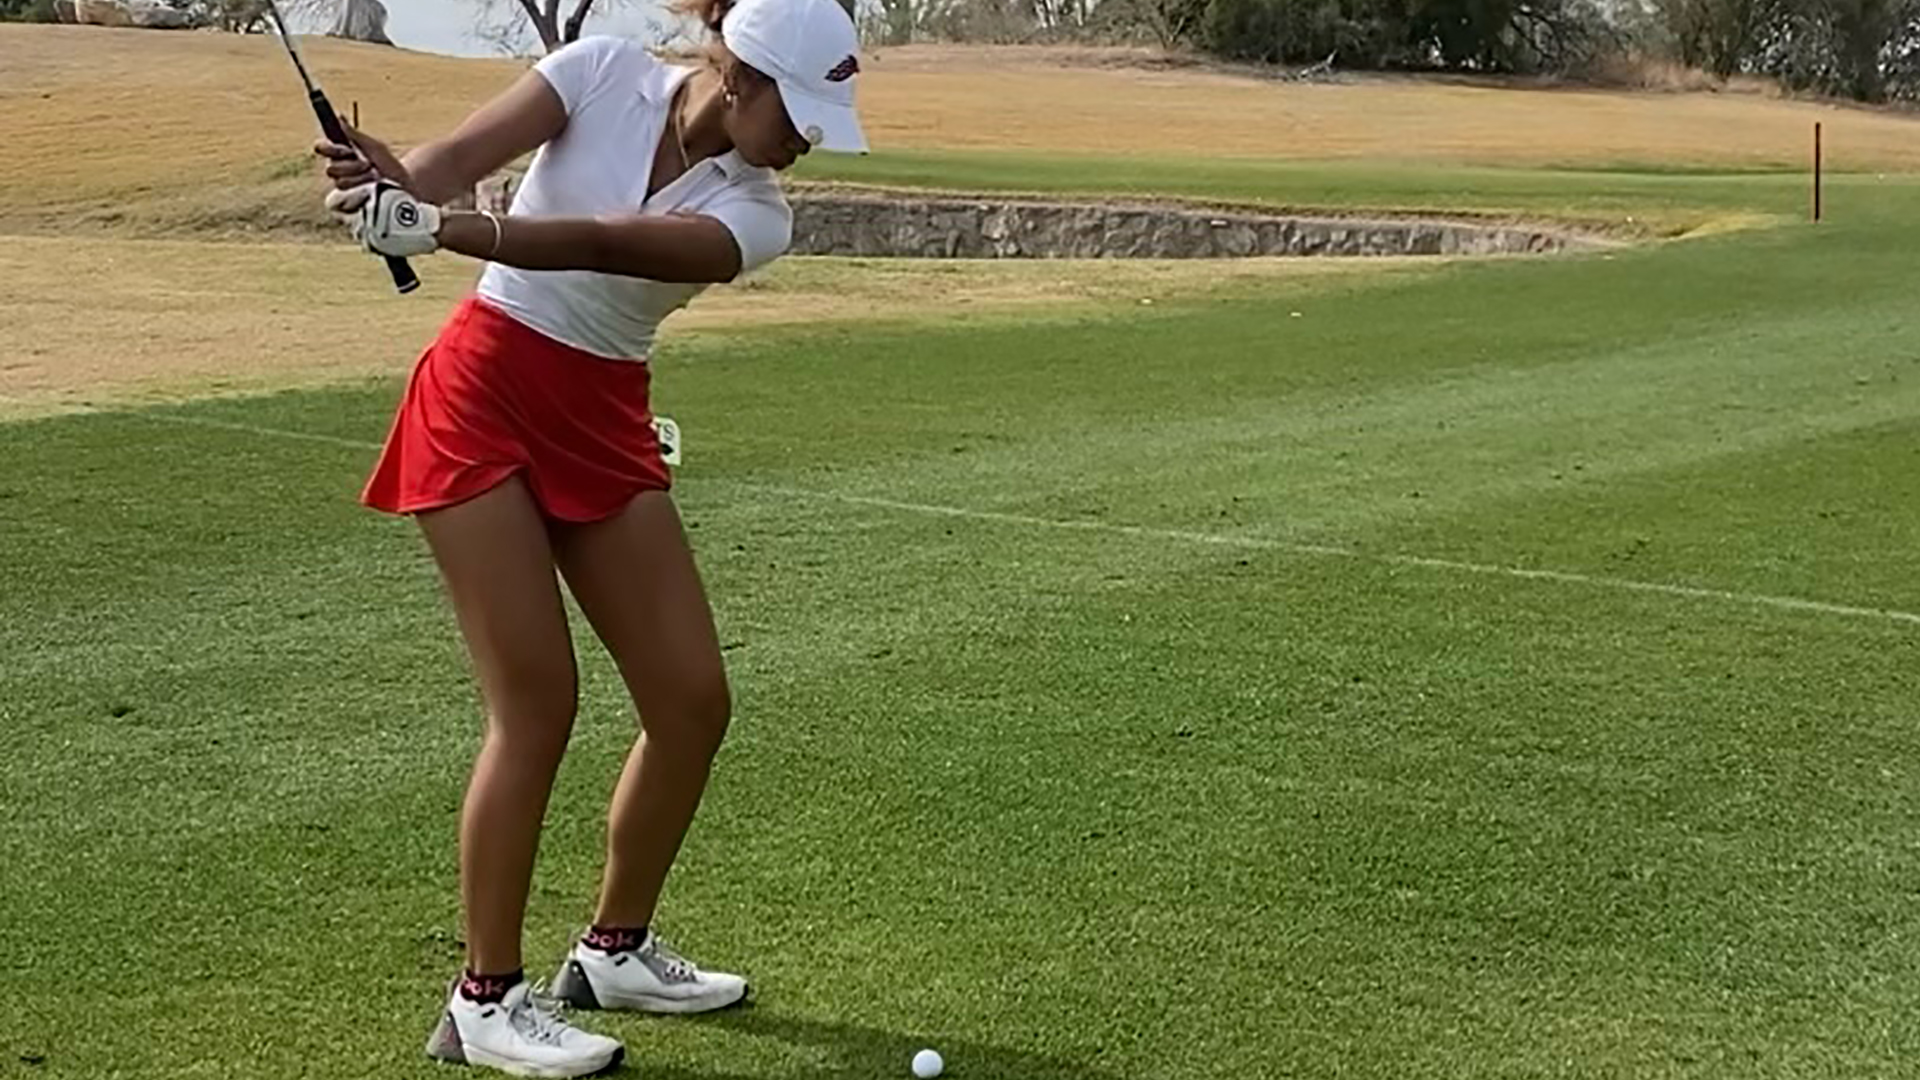 Vakasioula captures 11th straight as women's golf wins again